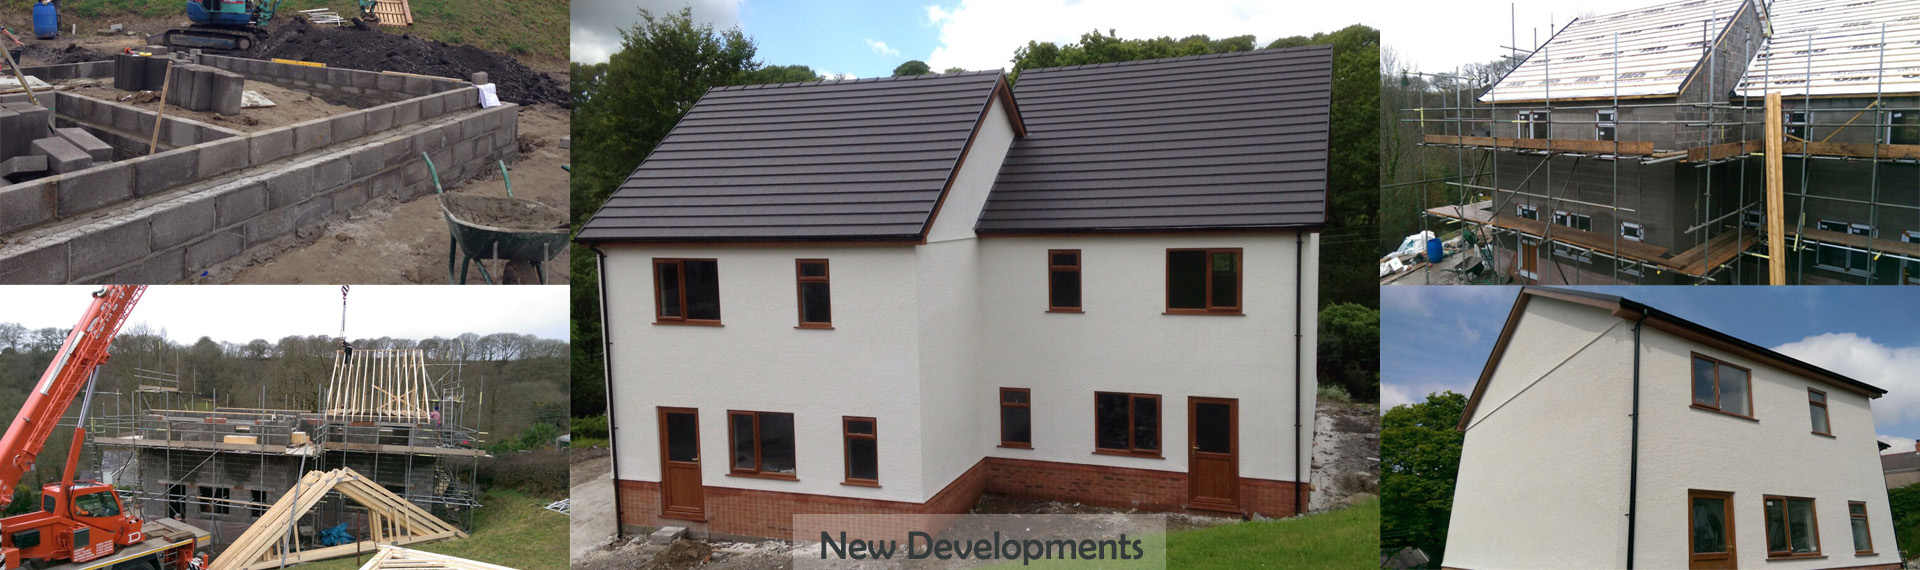 New Developments by S&A Building Contractors in Neath, Port Talbot, Swansea, Porthcawl, Bridgend.